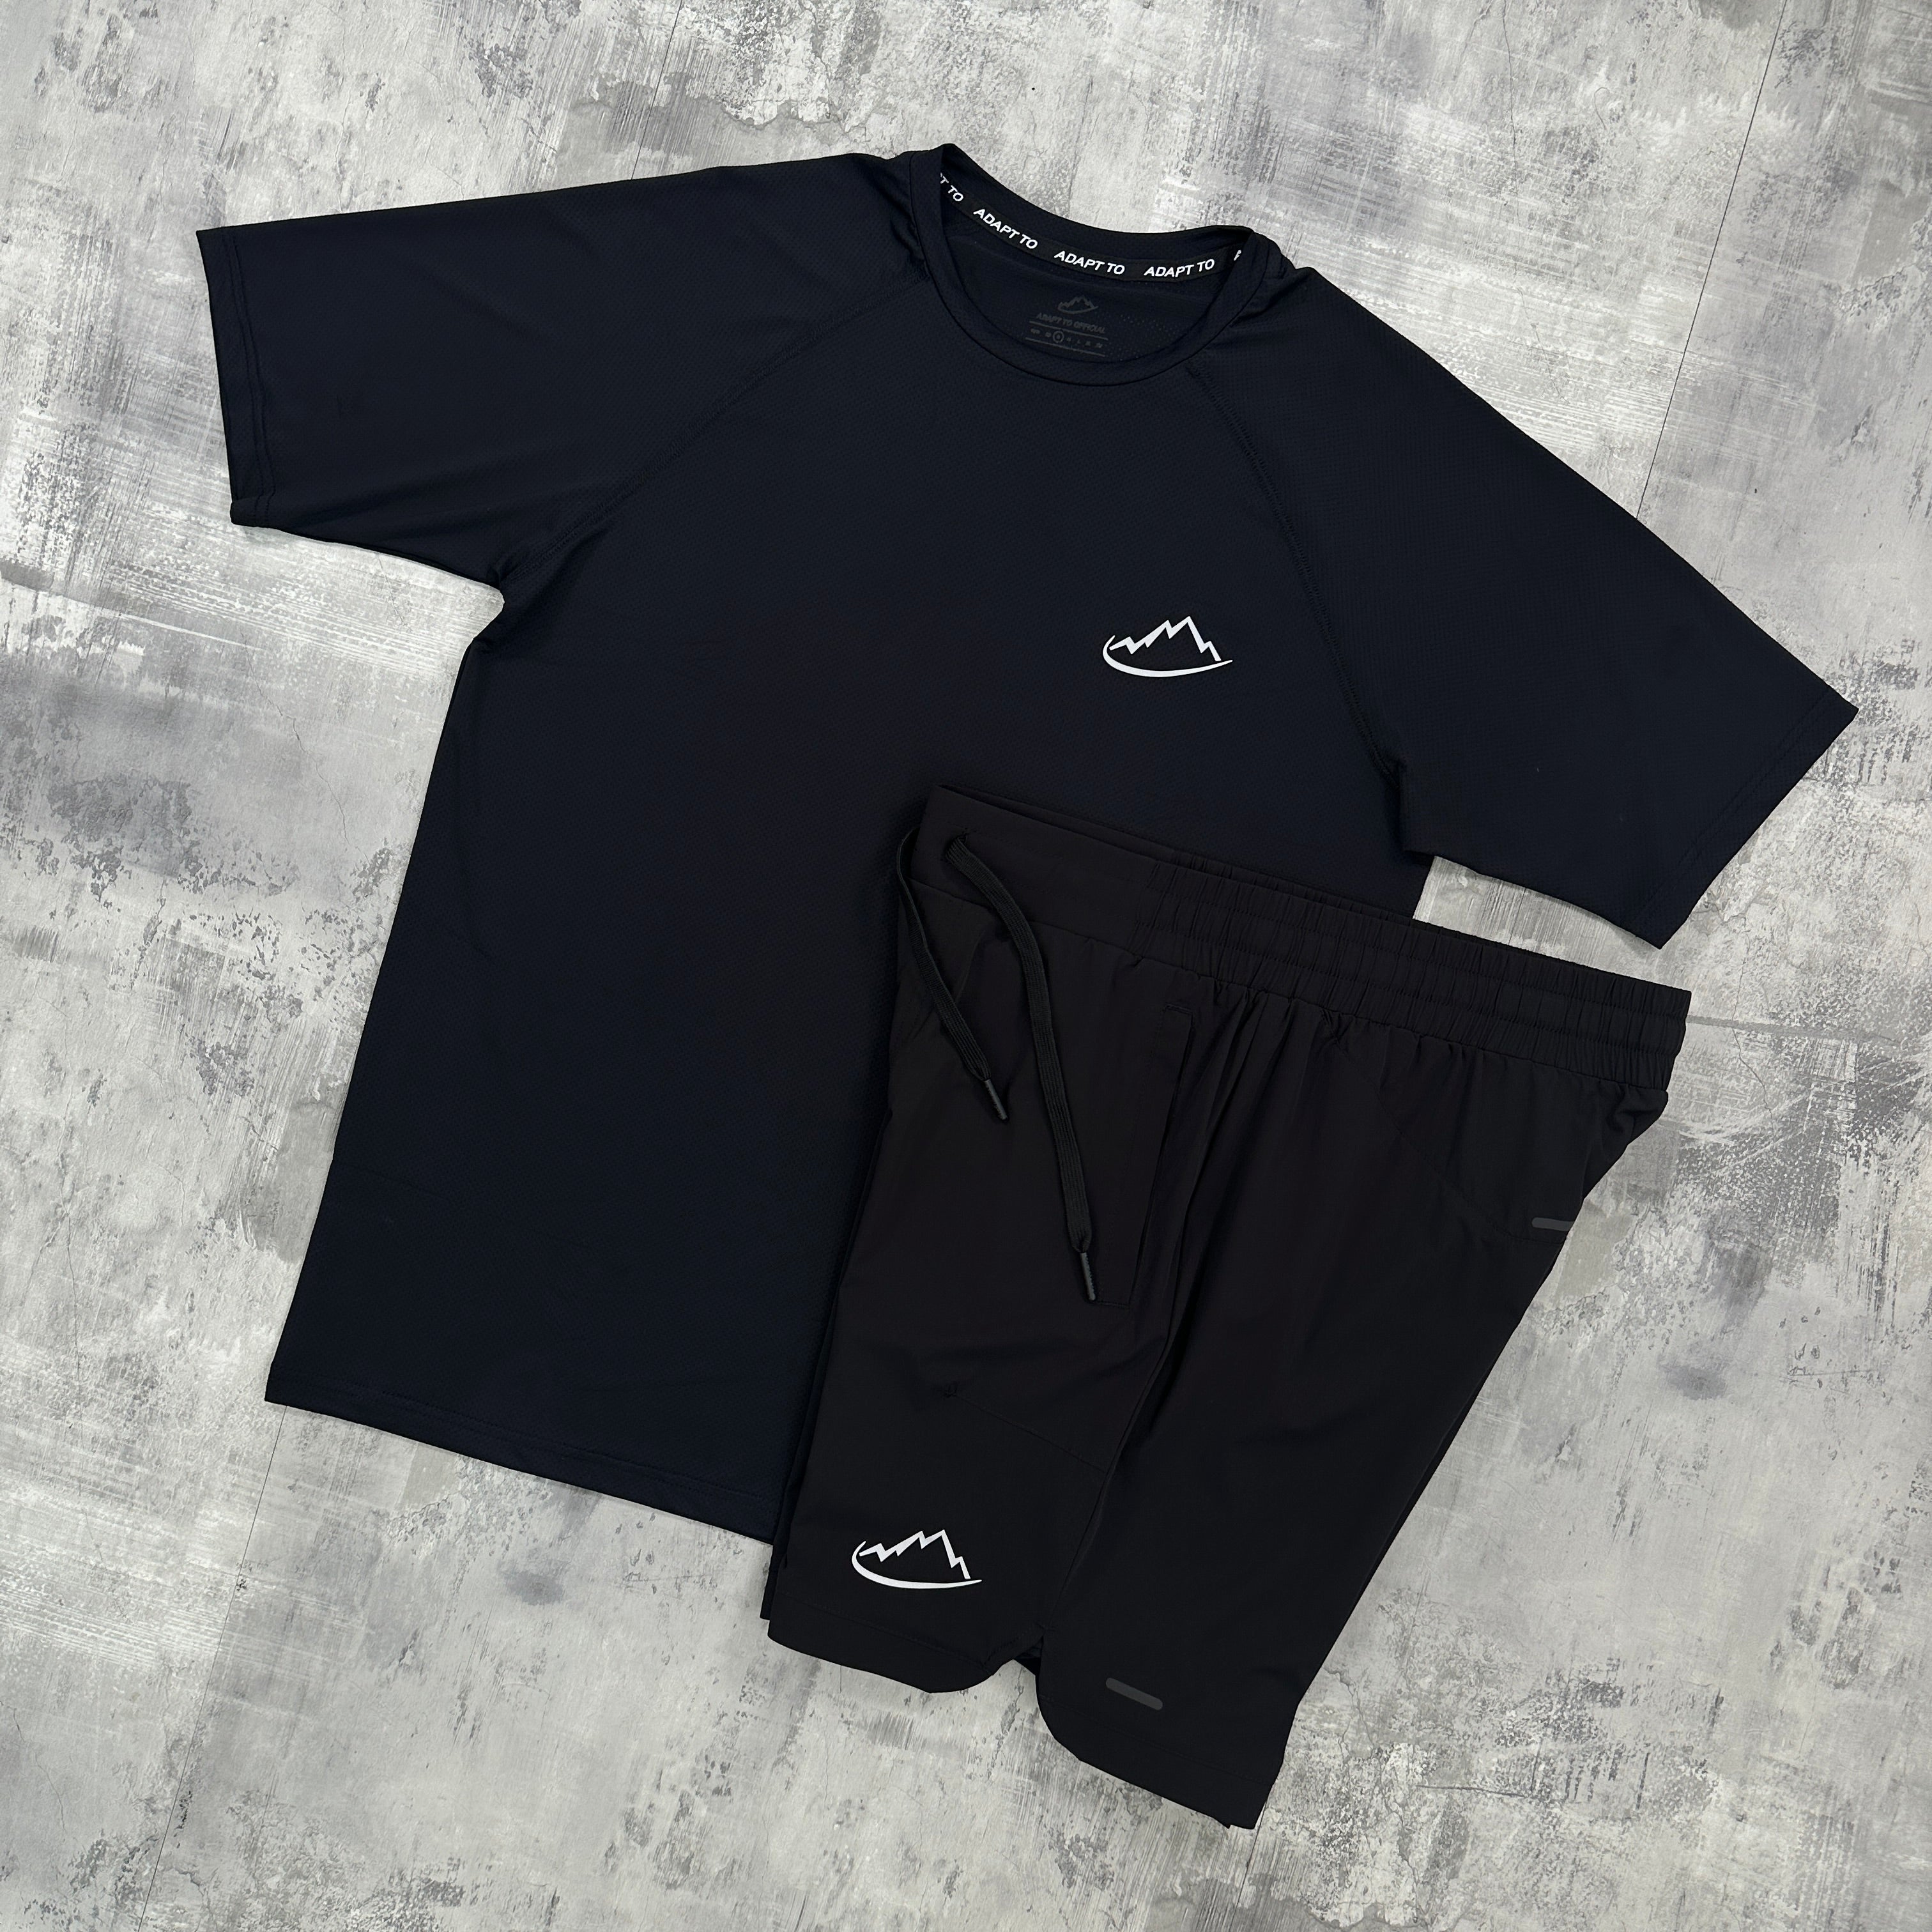 Adapt To Strive Set Black - T-shirt & Shorts